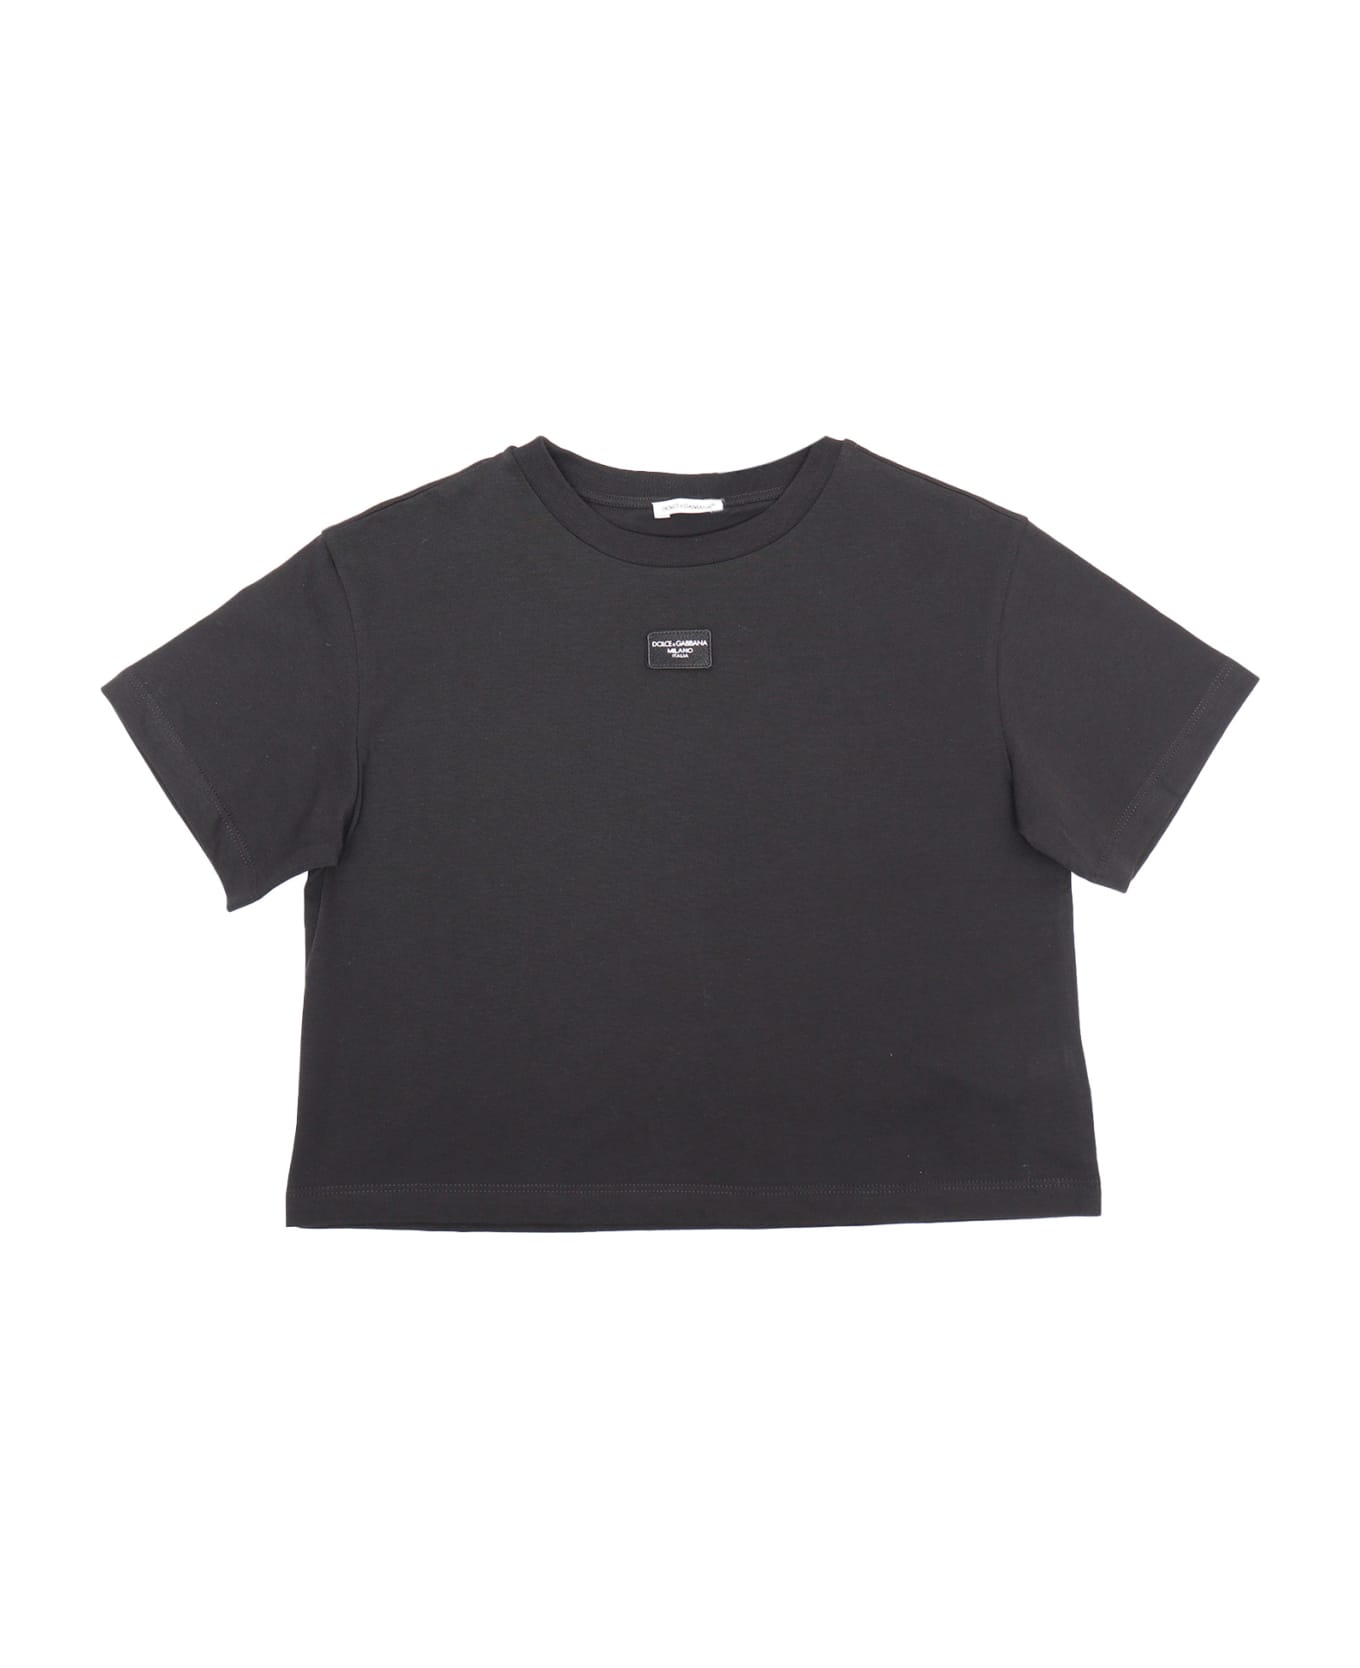 Dolce & Gabbana D&g Black Cropped T-shirt - BLACK